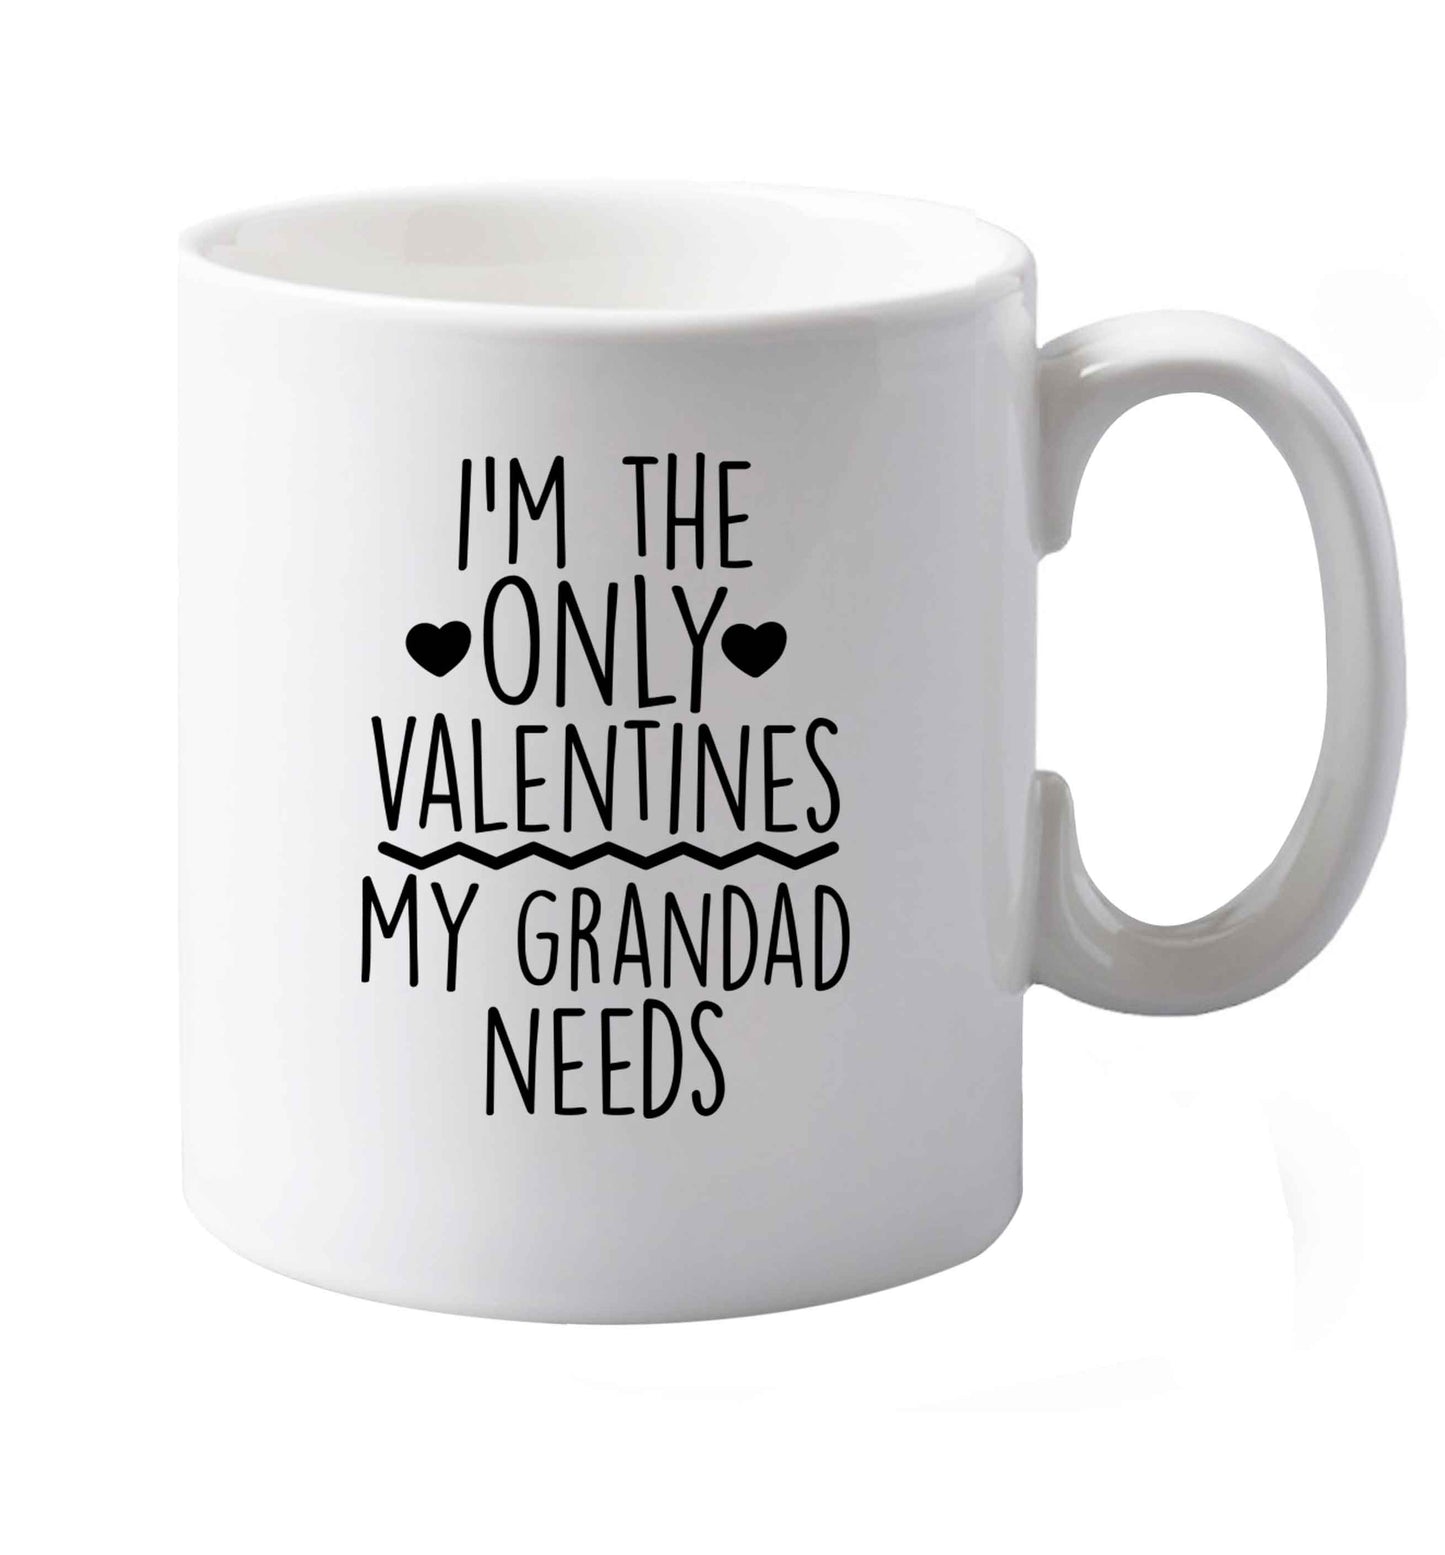 10 oz I'm the only valentines my grandad needs ceramic mug both sides